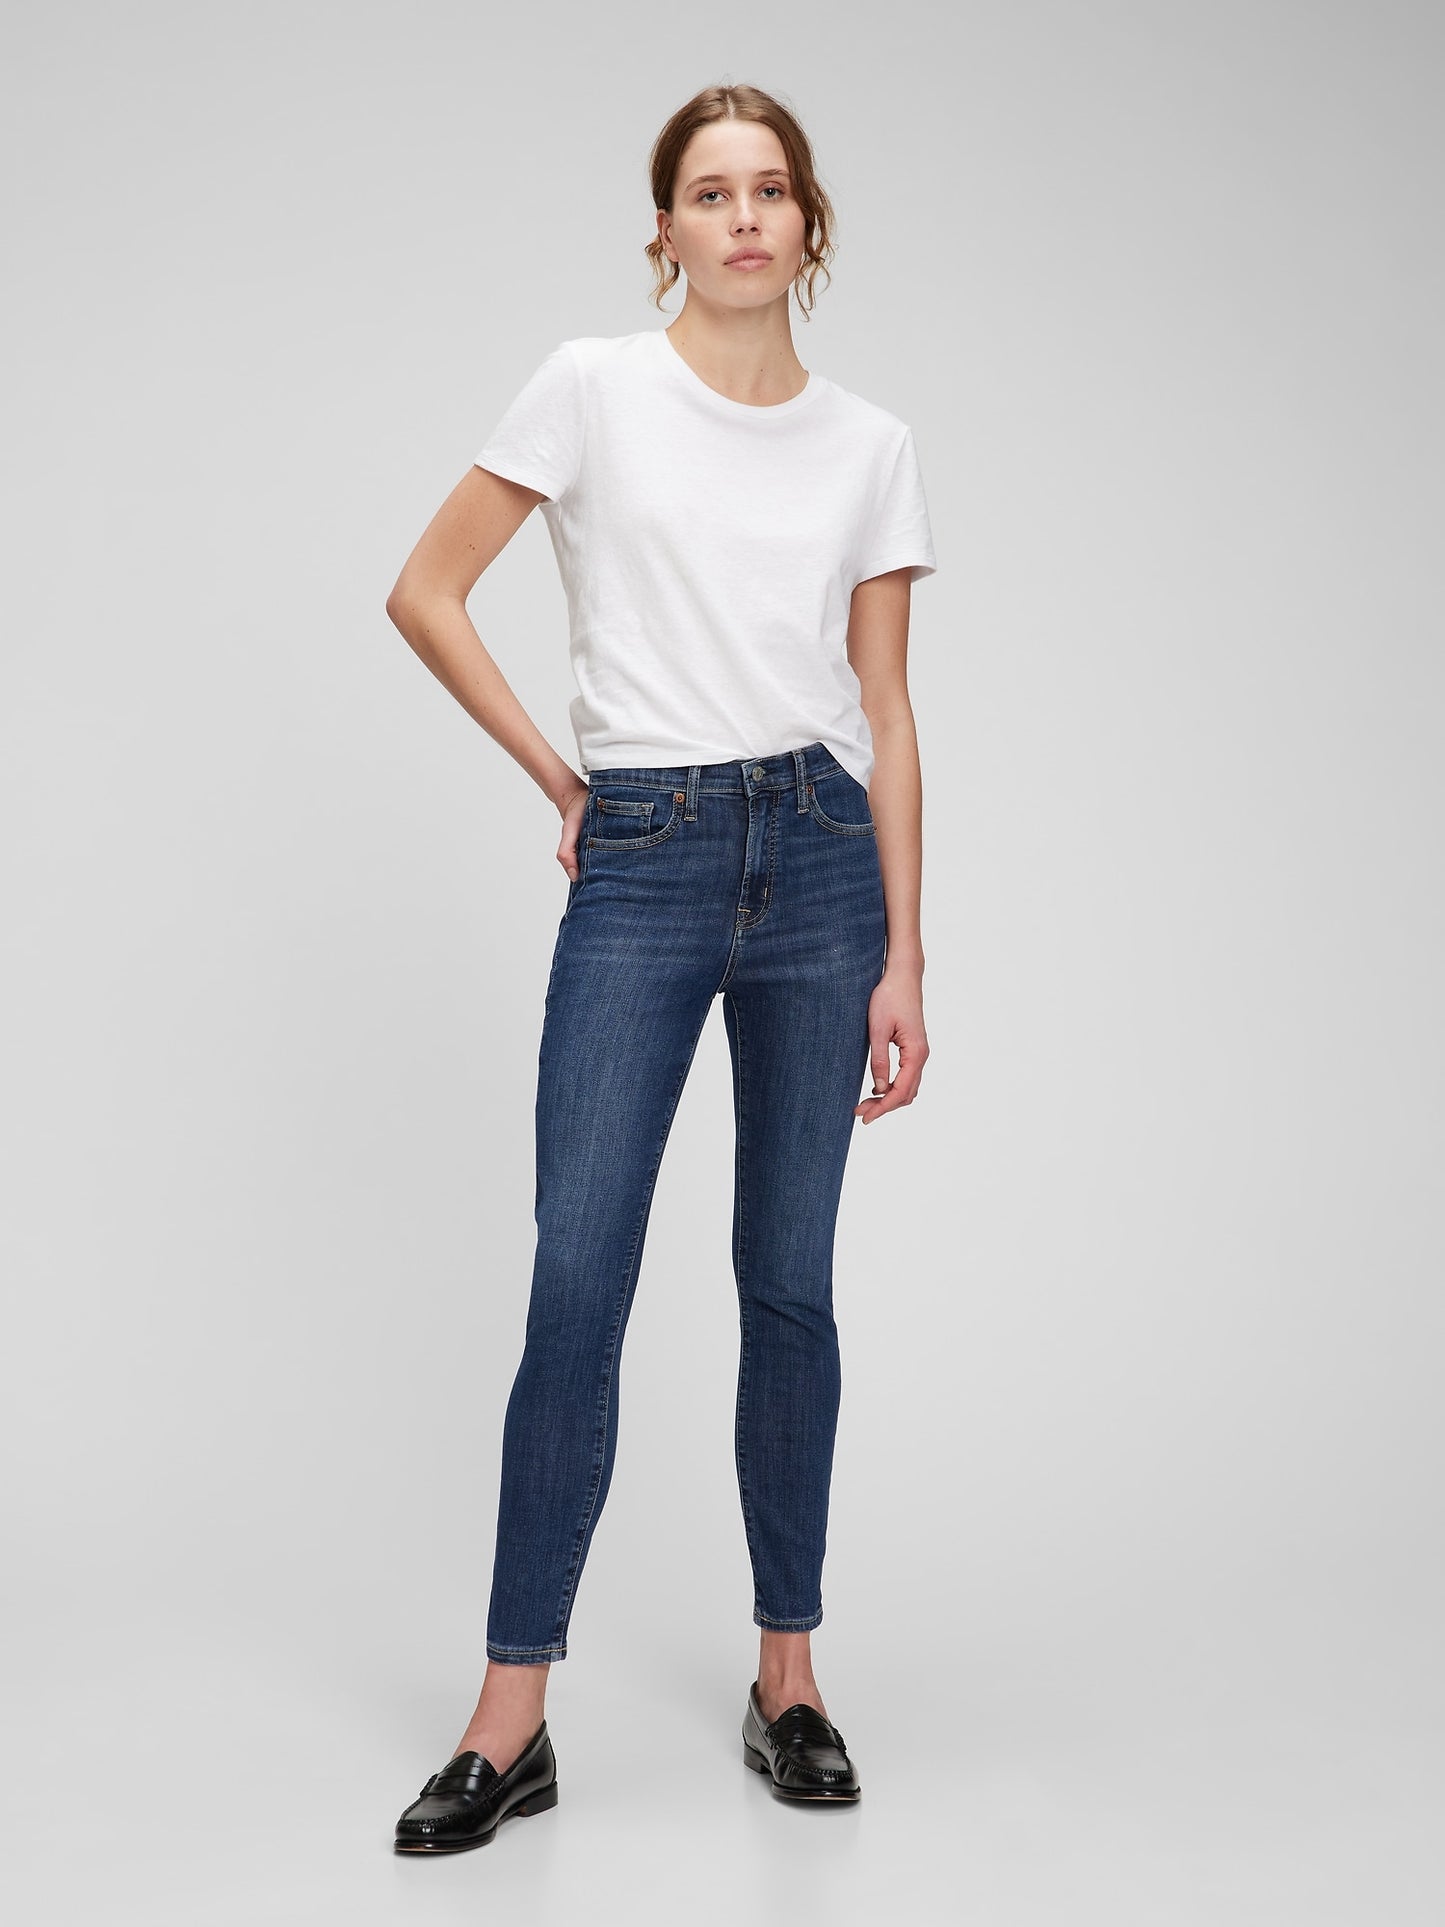 Gap High Rise Skinny Jean - Medium Indigo